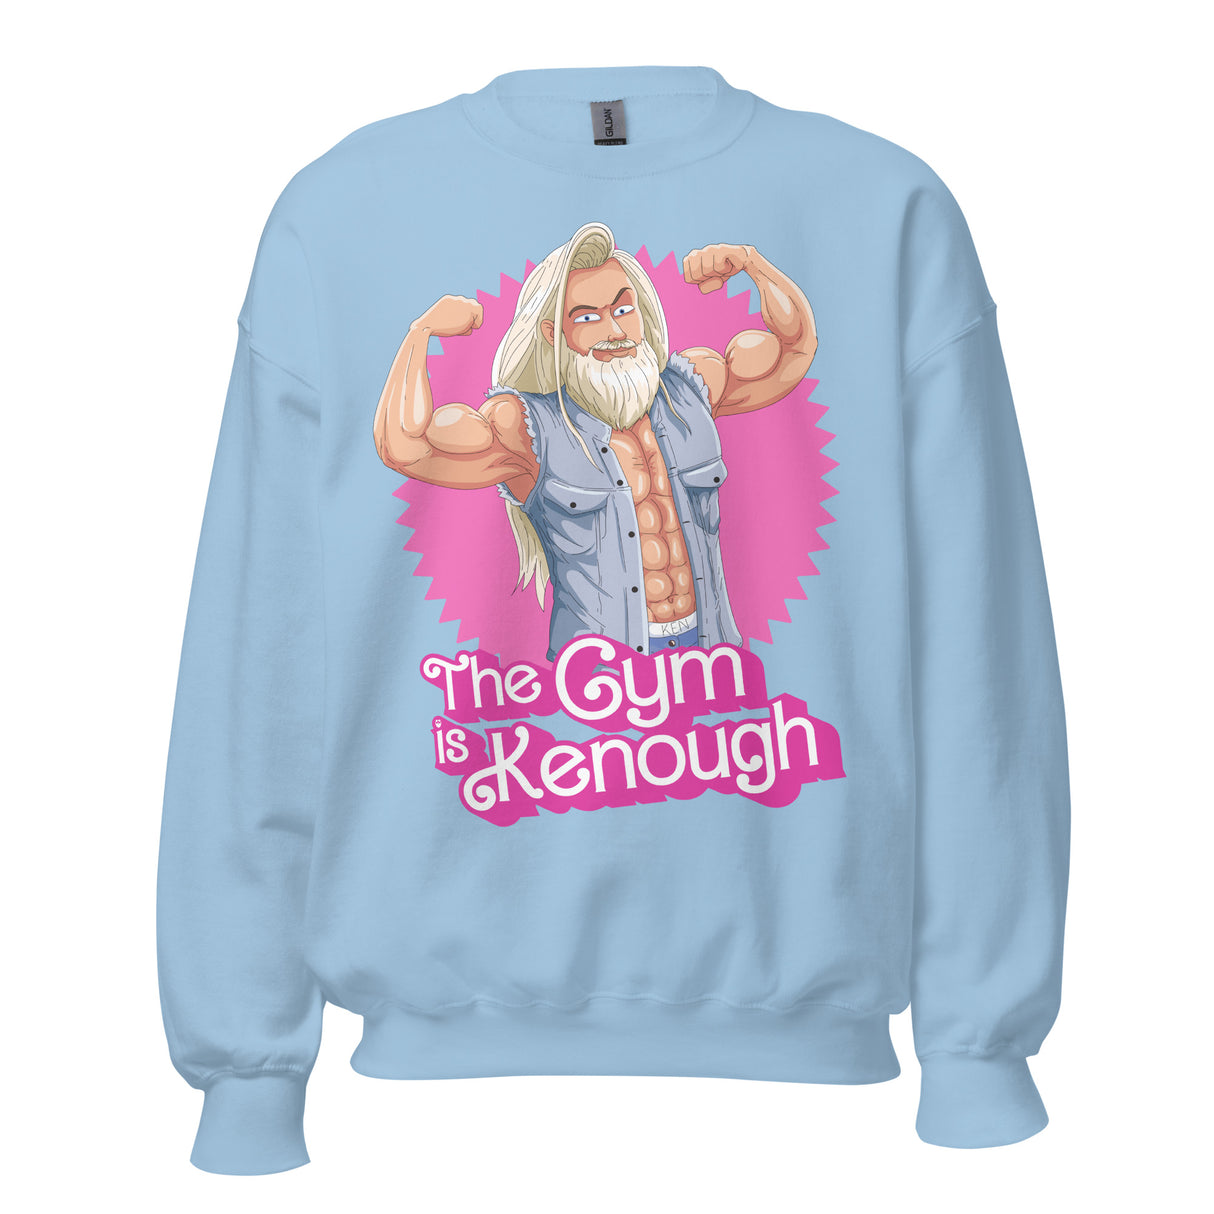 The Gym Is Kenough (Image) Sweatshirt